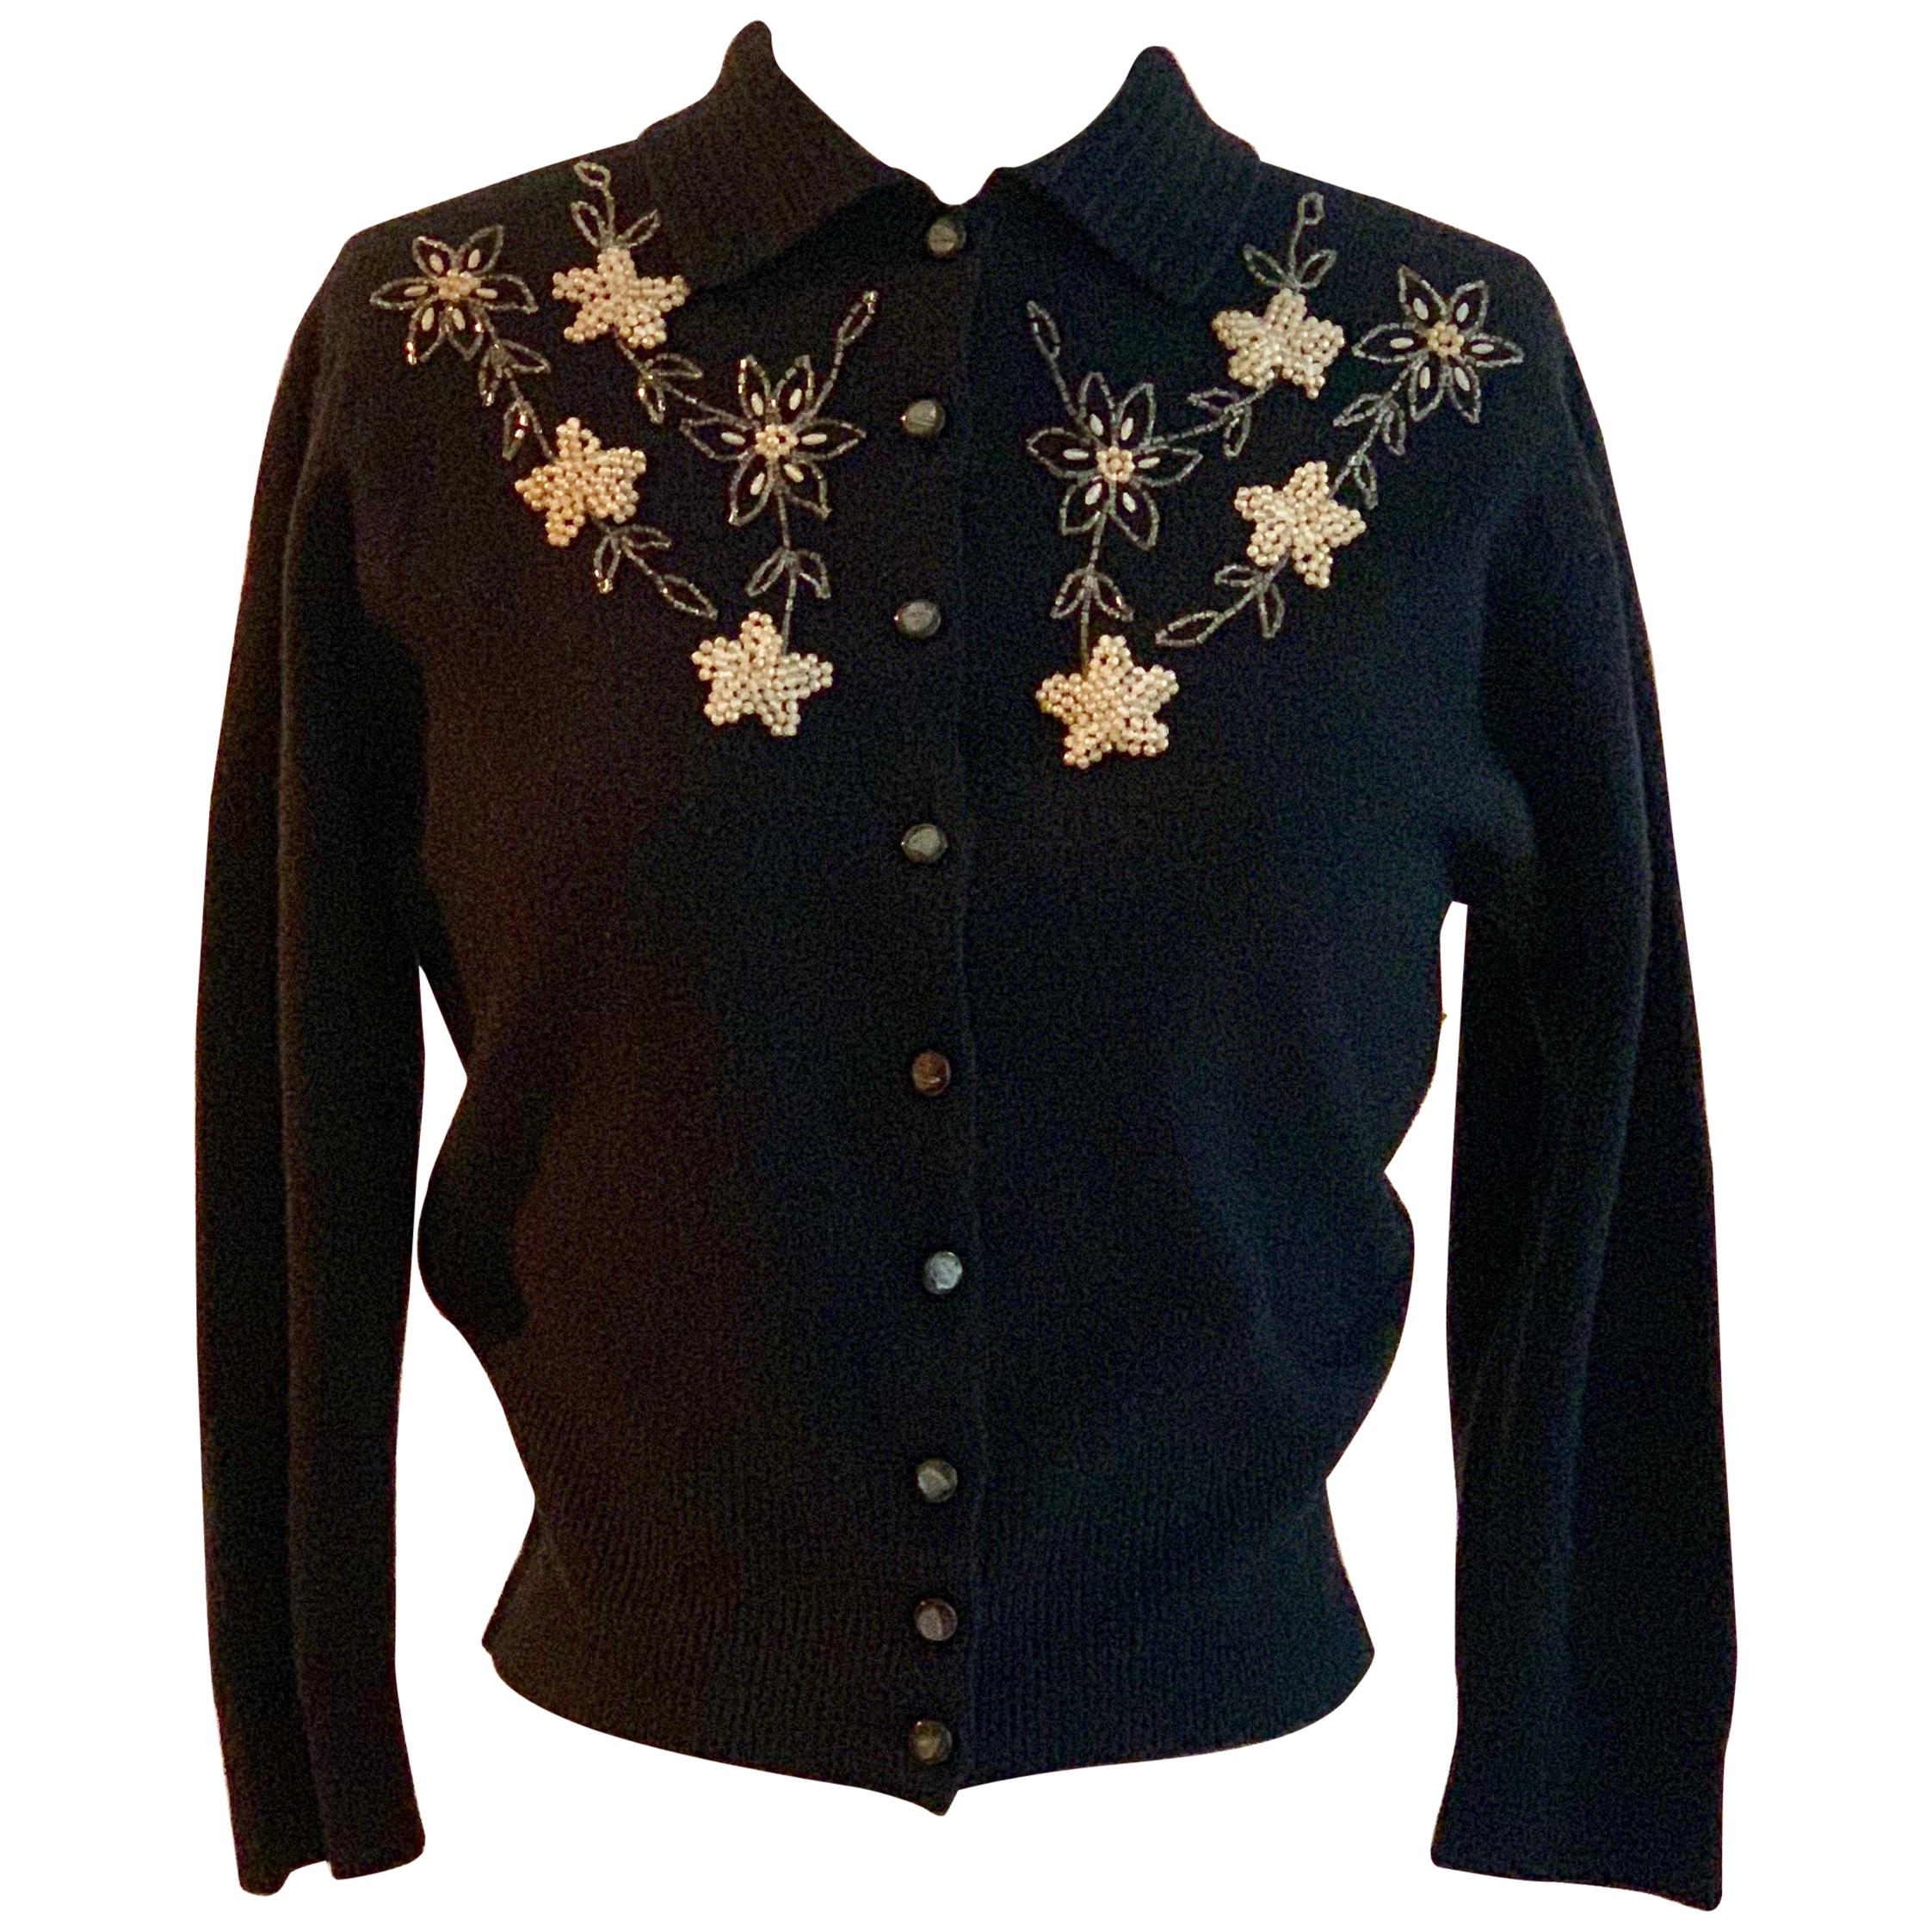 Schiaparelli Soft Black Floral Beaded Embellished Cardigan Sweater, 1960s